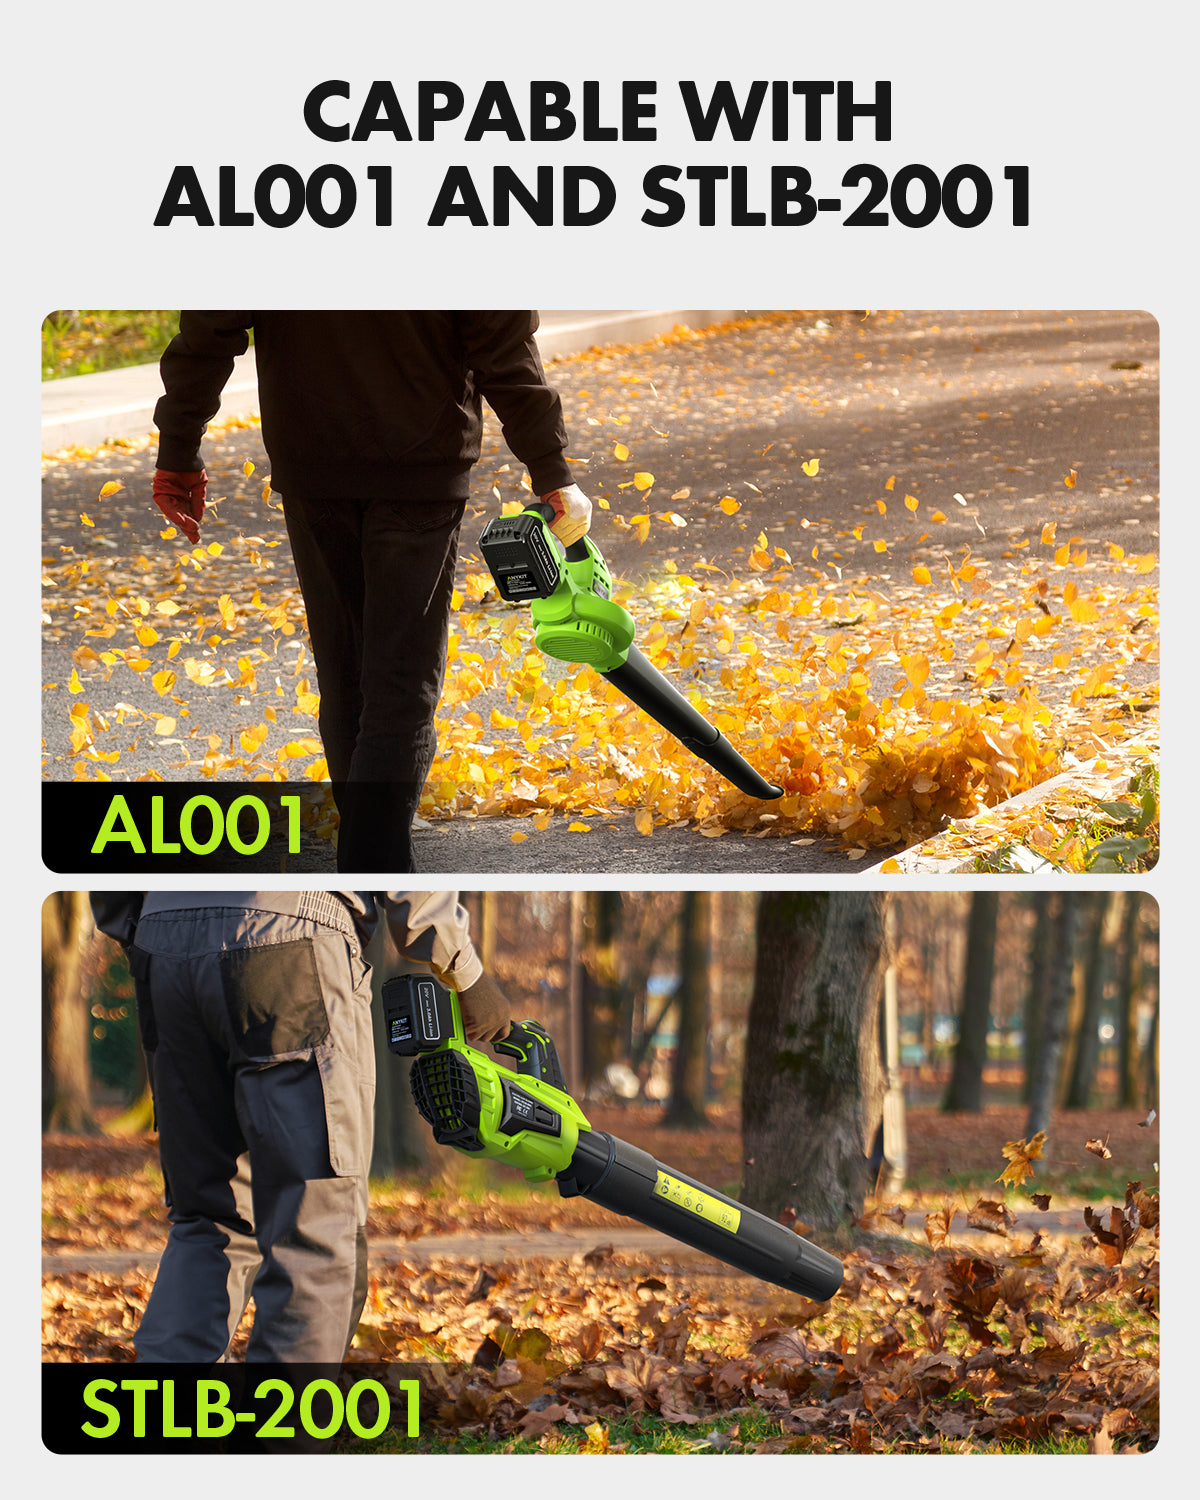 Anykit 3.0Ah STLB-2001/AL001 Leaf Blower Battery